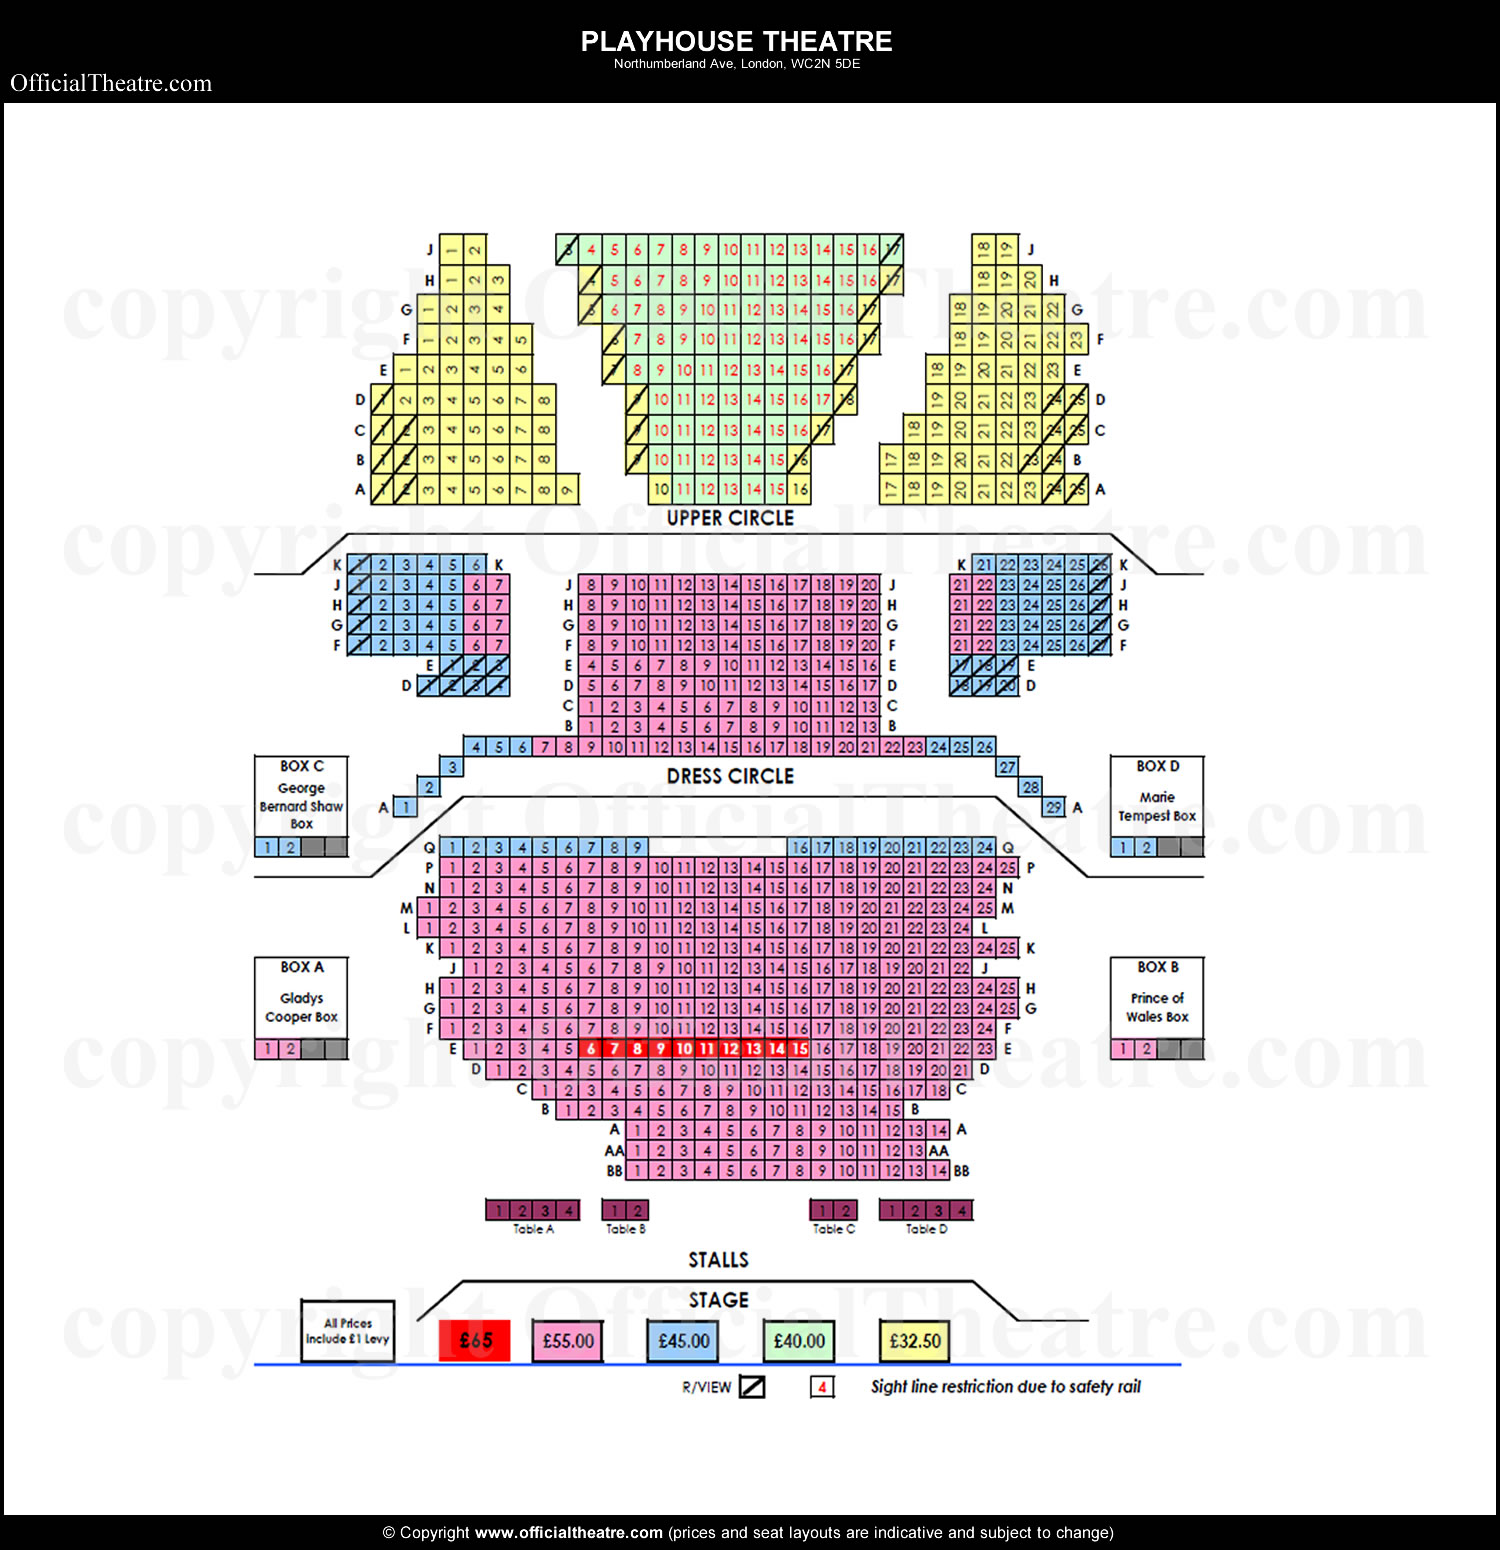 Sydney Opera House Playhouse Seating Chart